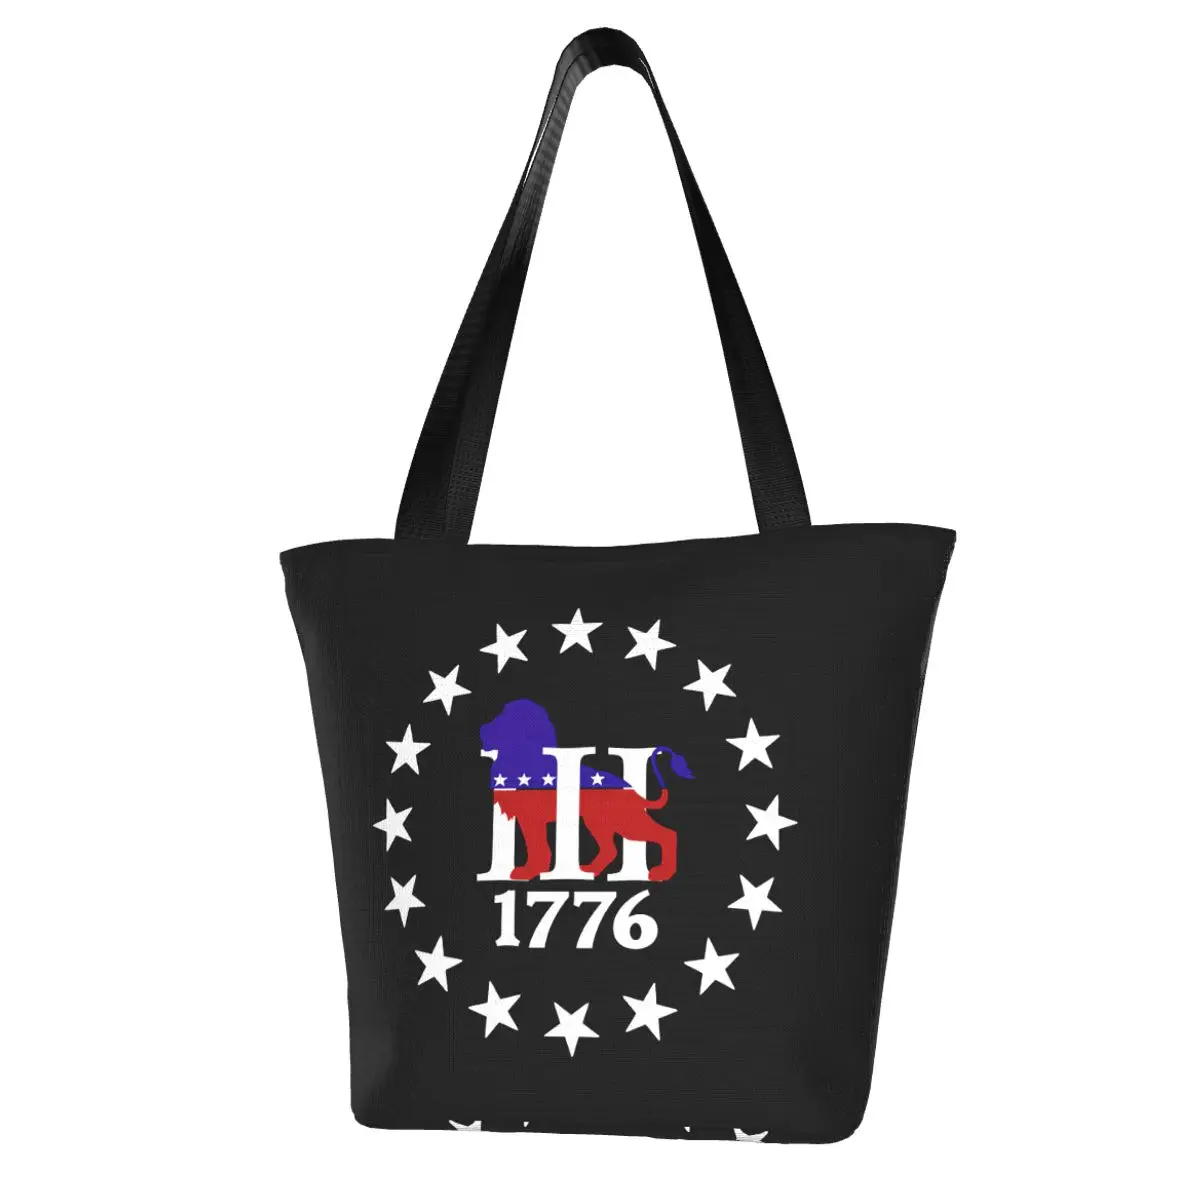 3 1776 Lion Patriot Party Shopping Bag Aesthetic Cloth Outdoor Handbag Female Fashion Bags